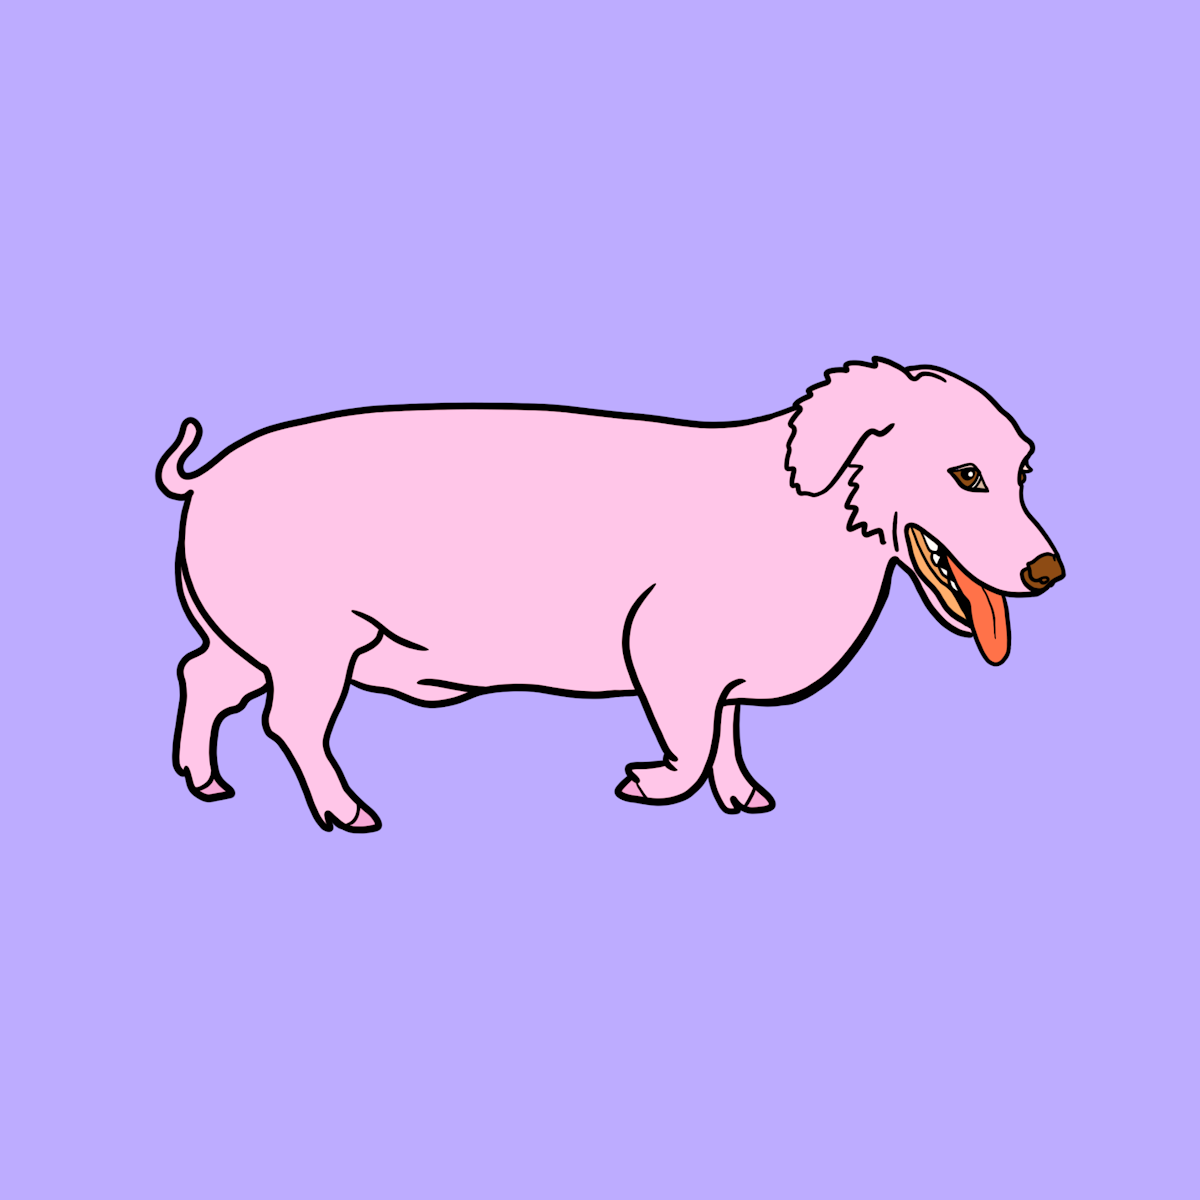 illustration of the funny German word "Schweinehund"